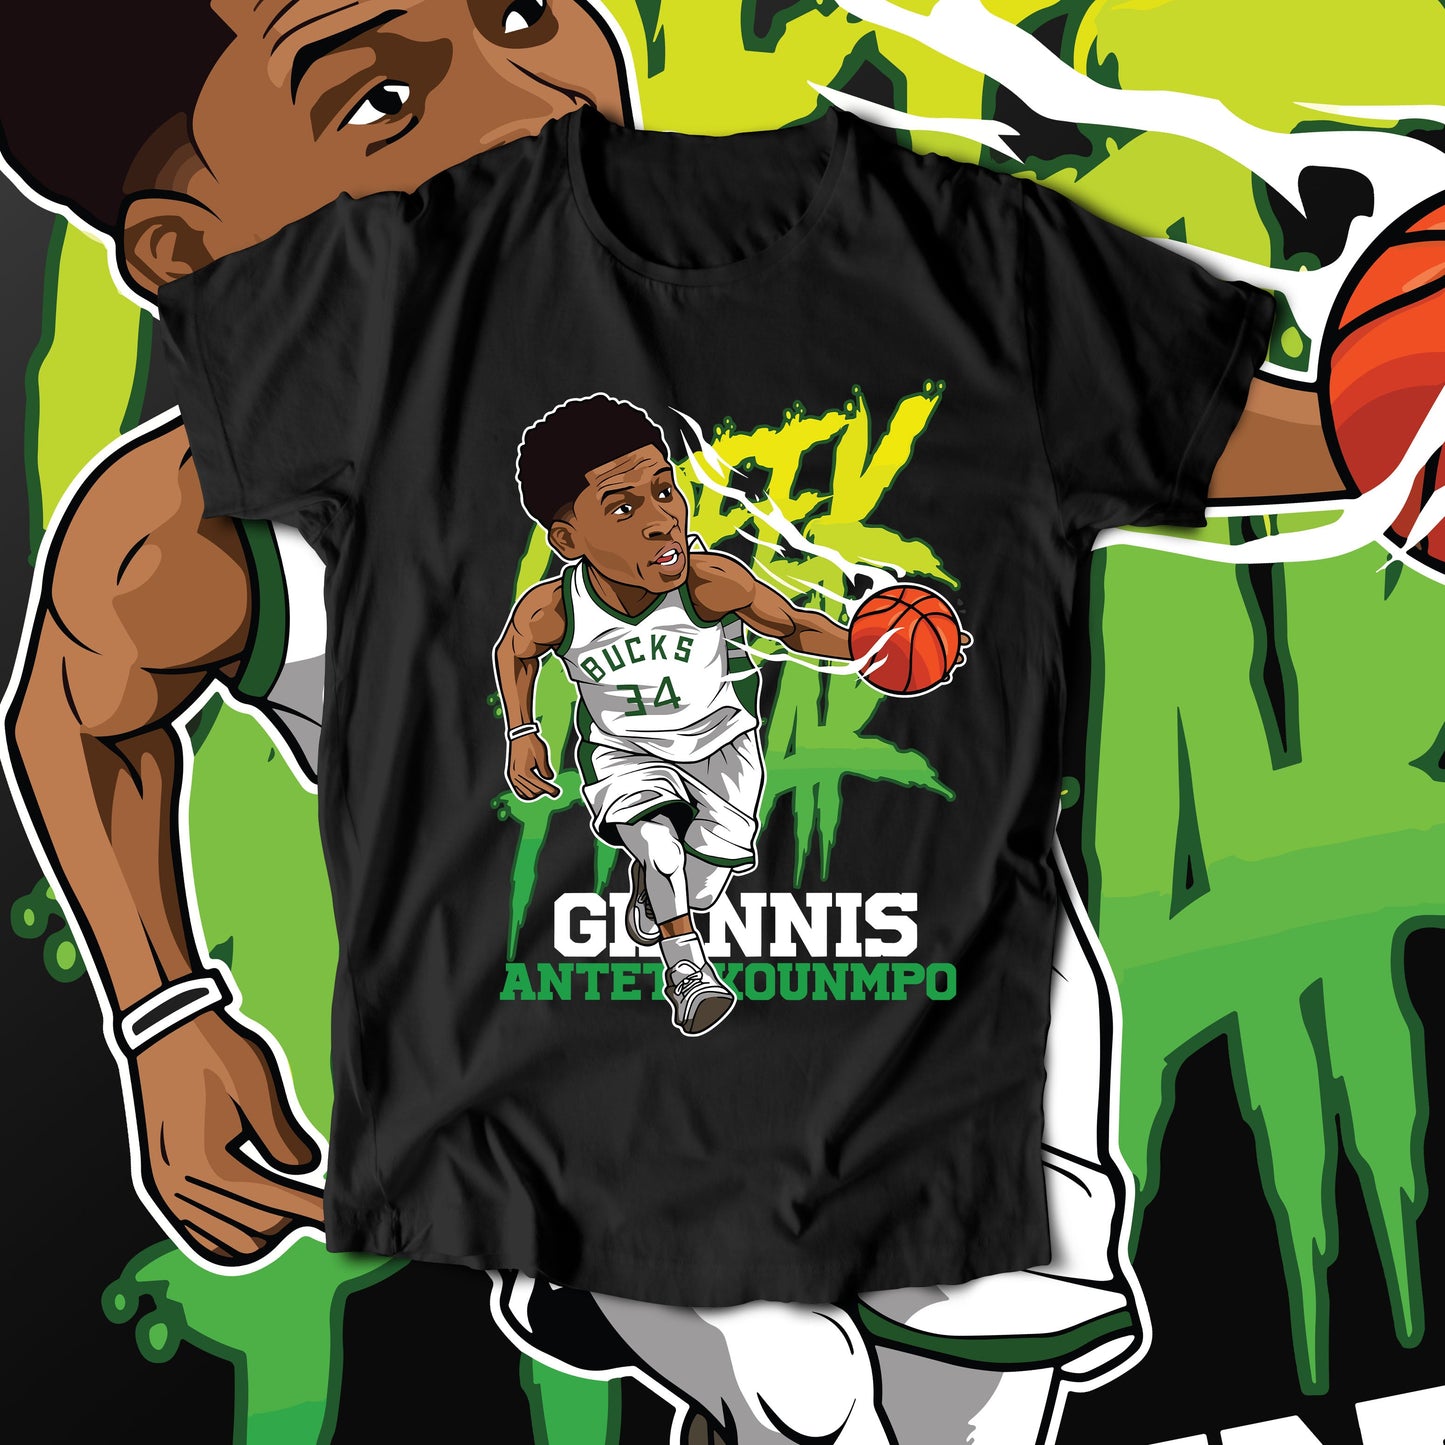 Giannis Antetokounmpo - Big Dawg (T-Shirt)